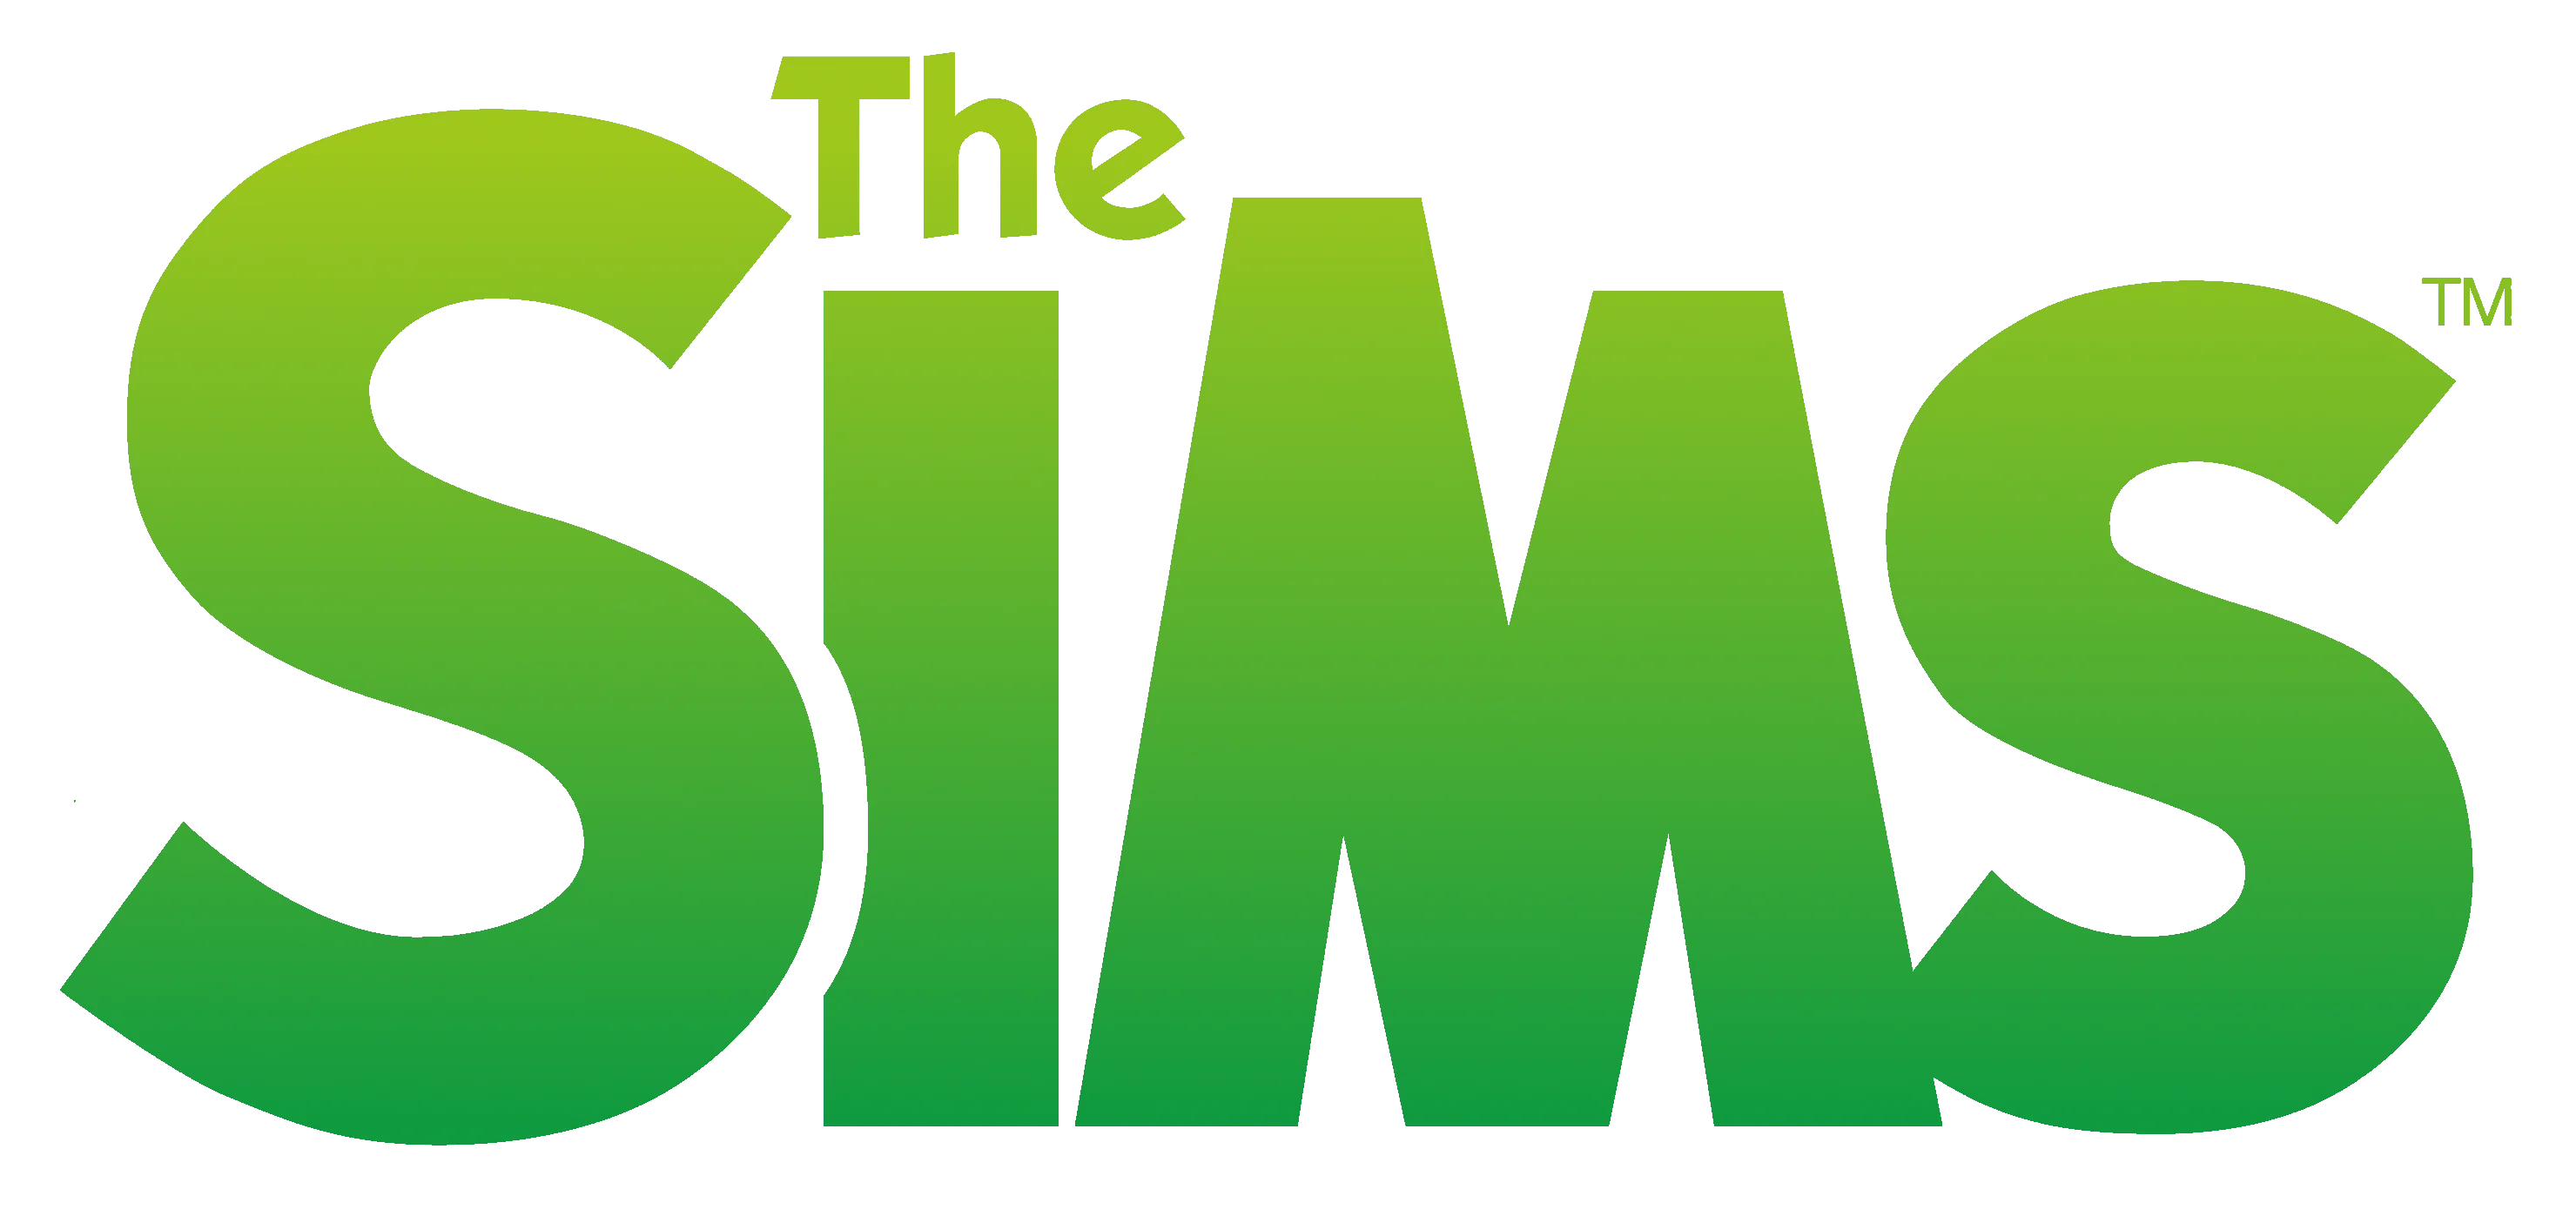 Sims_logo_green.png